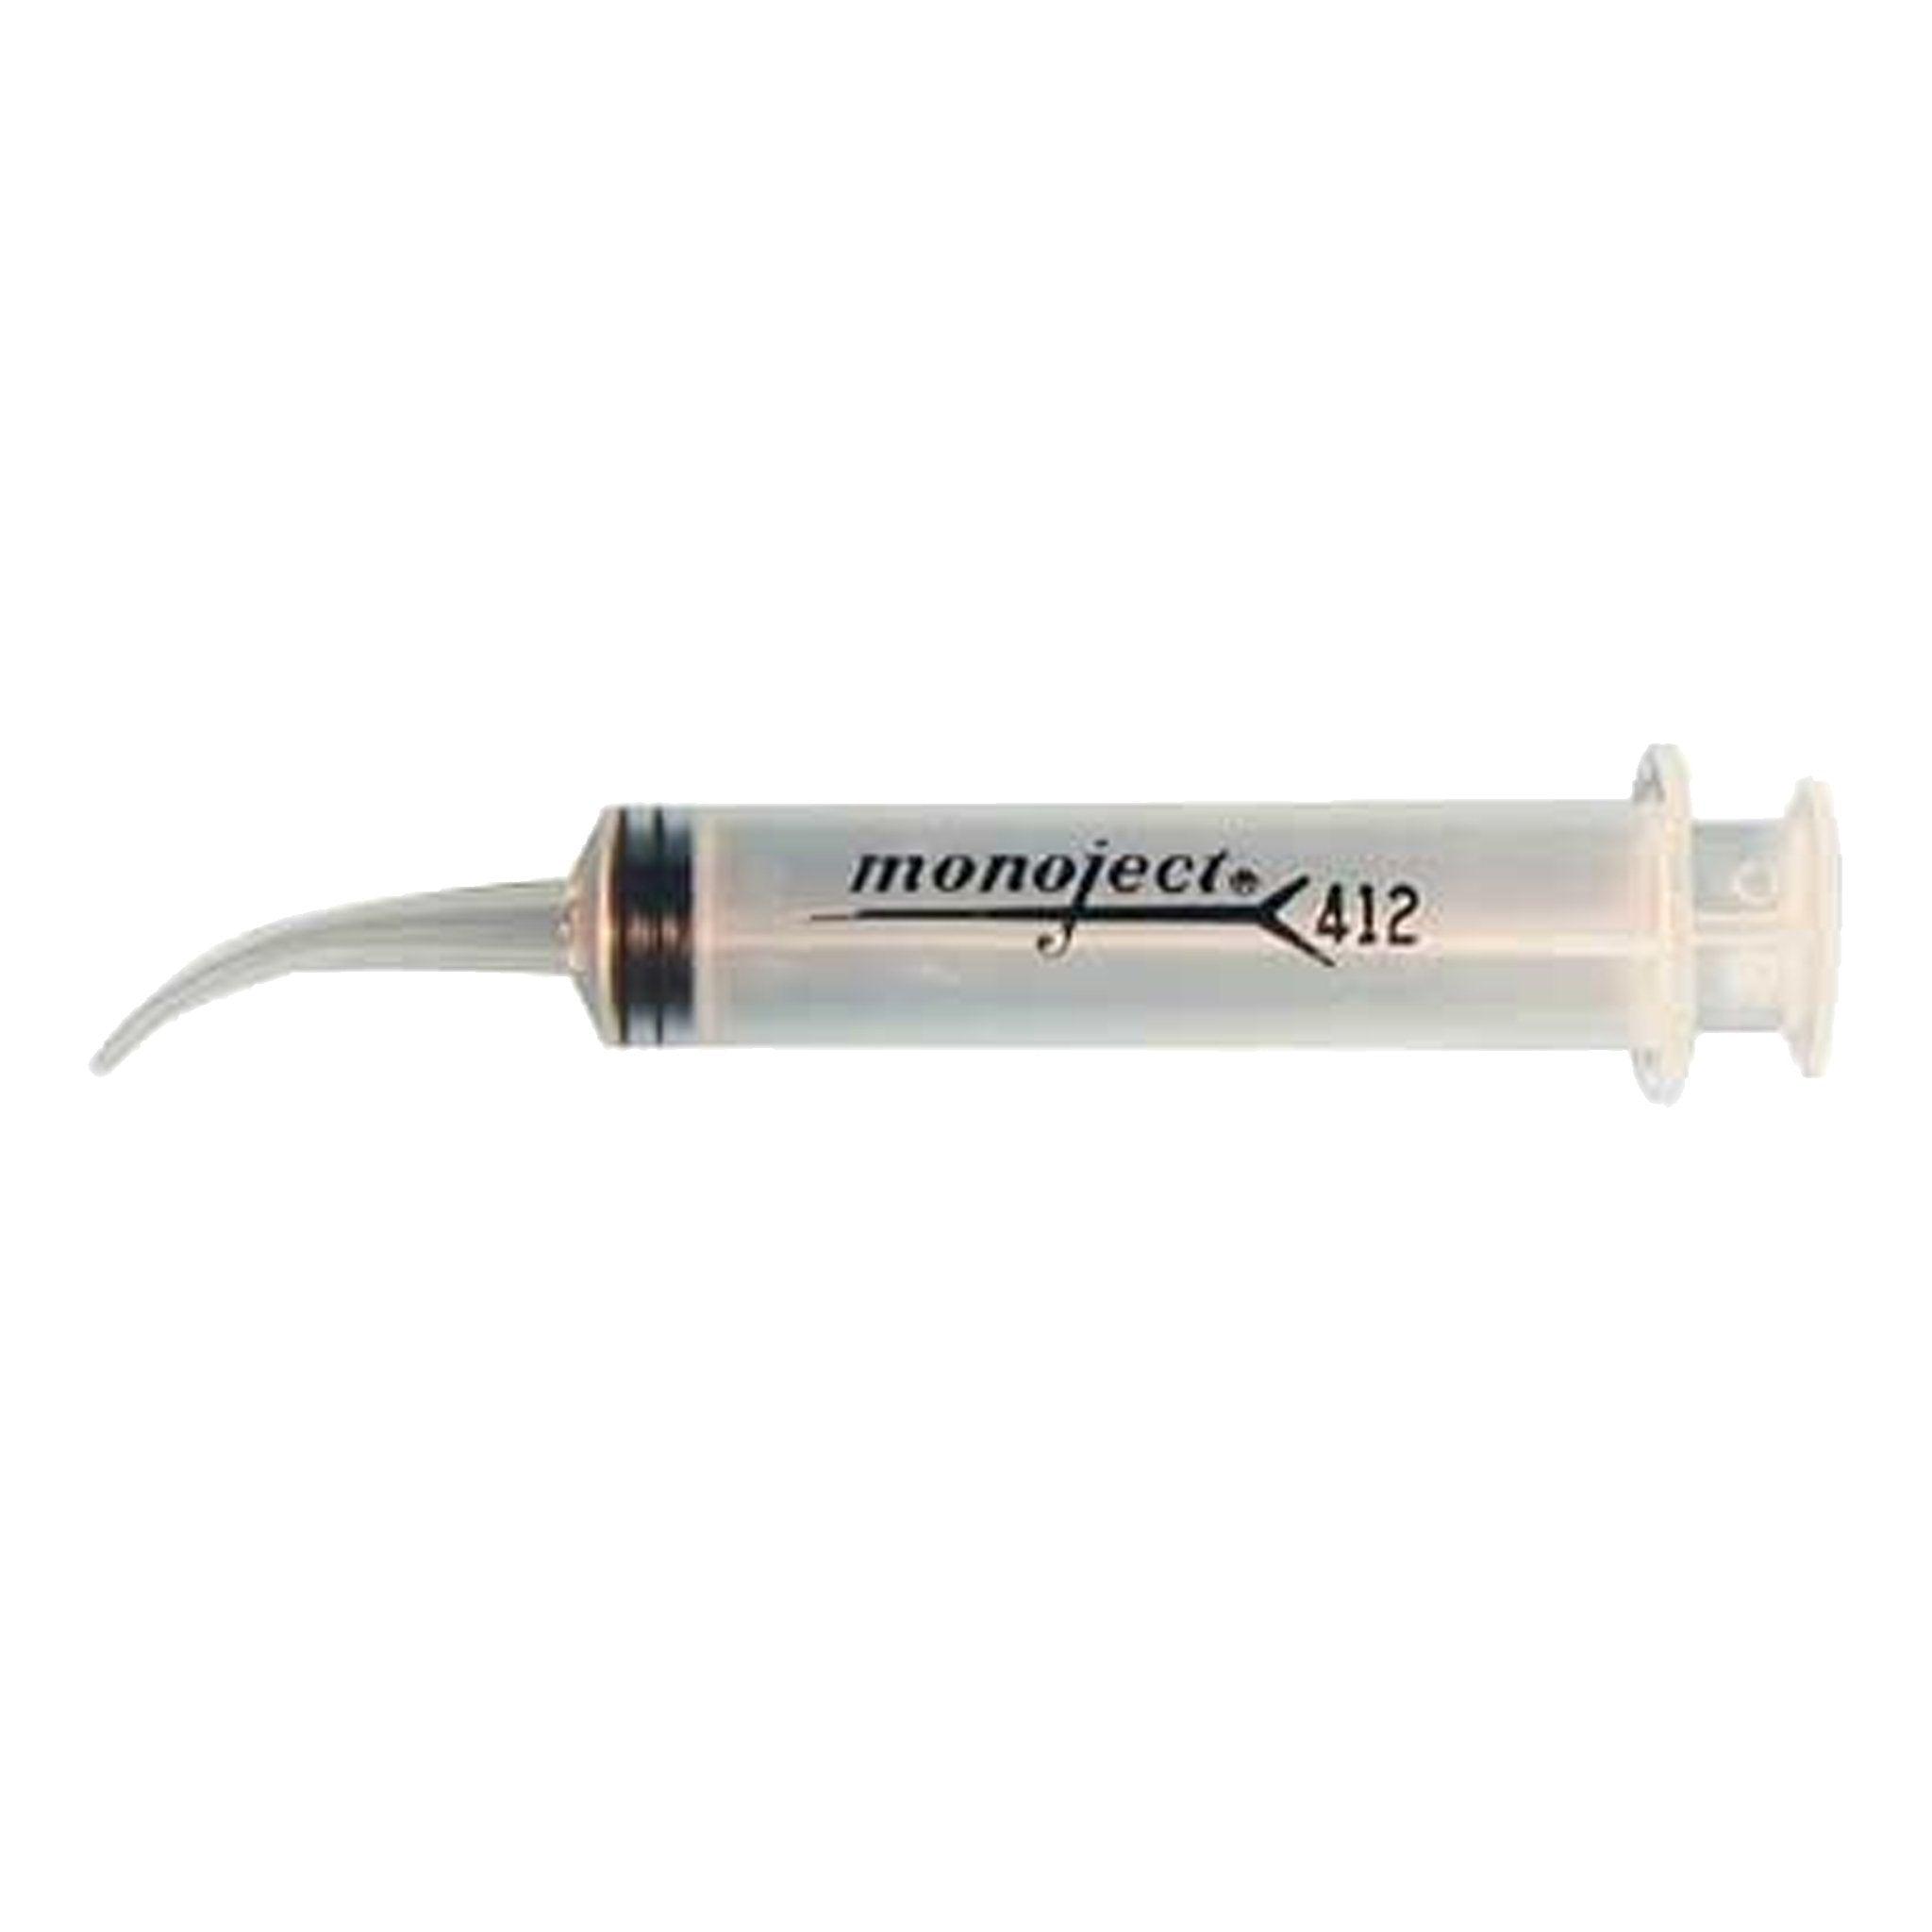 Curved Tip Syringes - Matuska Taxidermy Supply Company